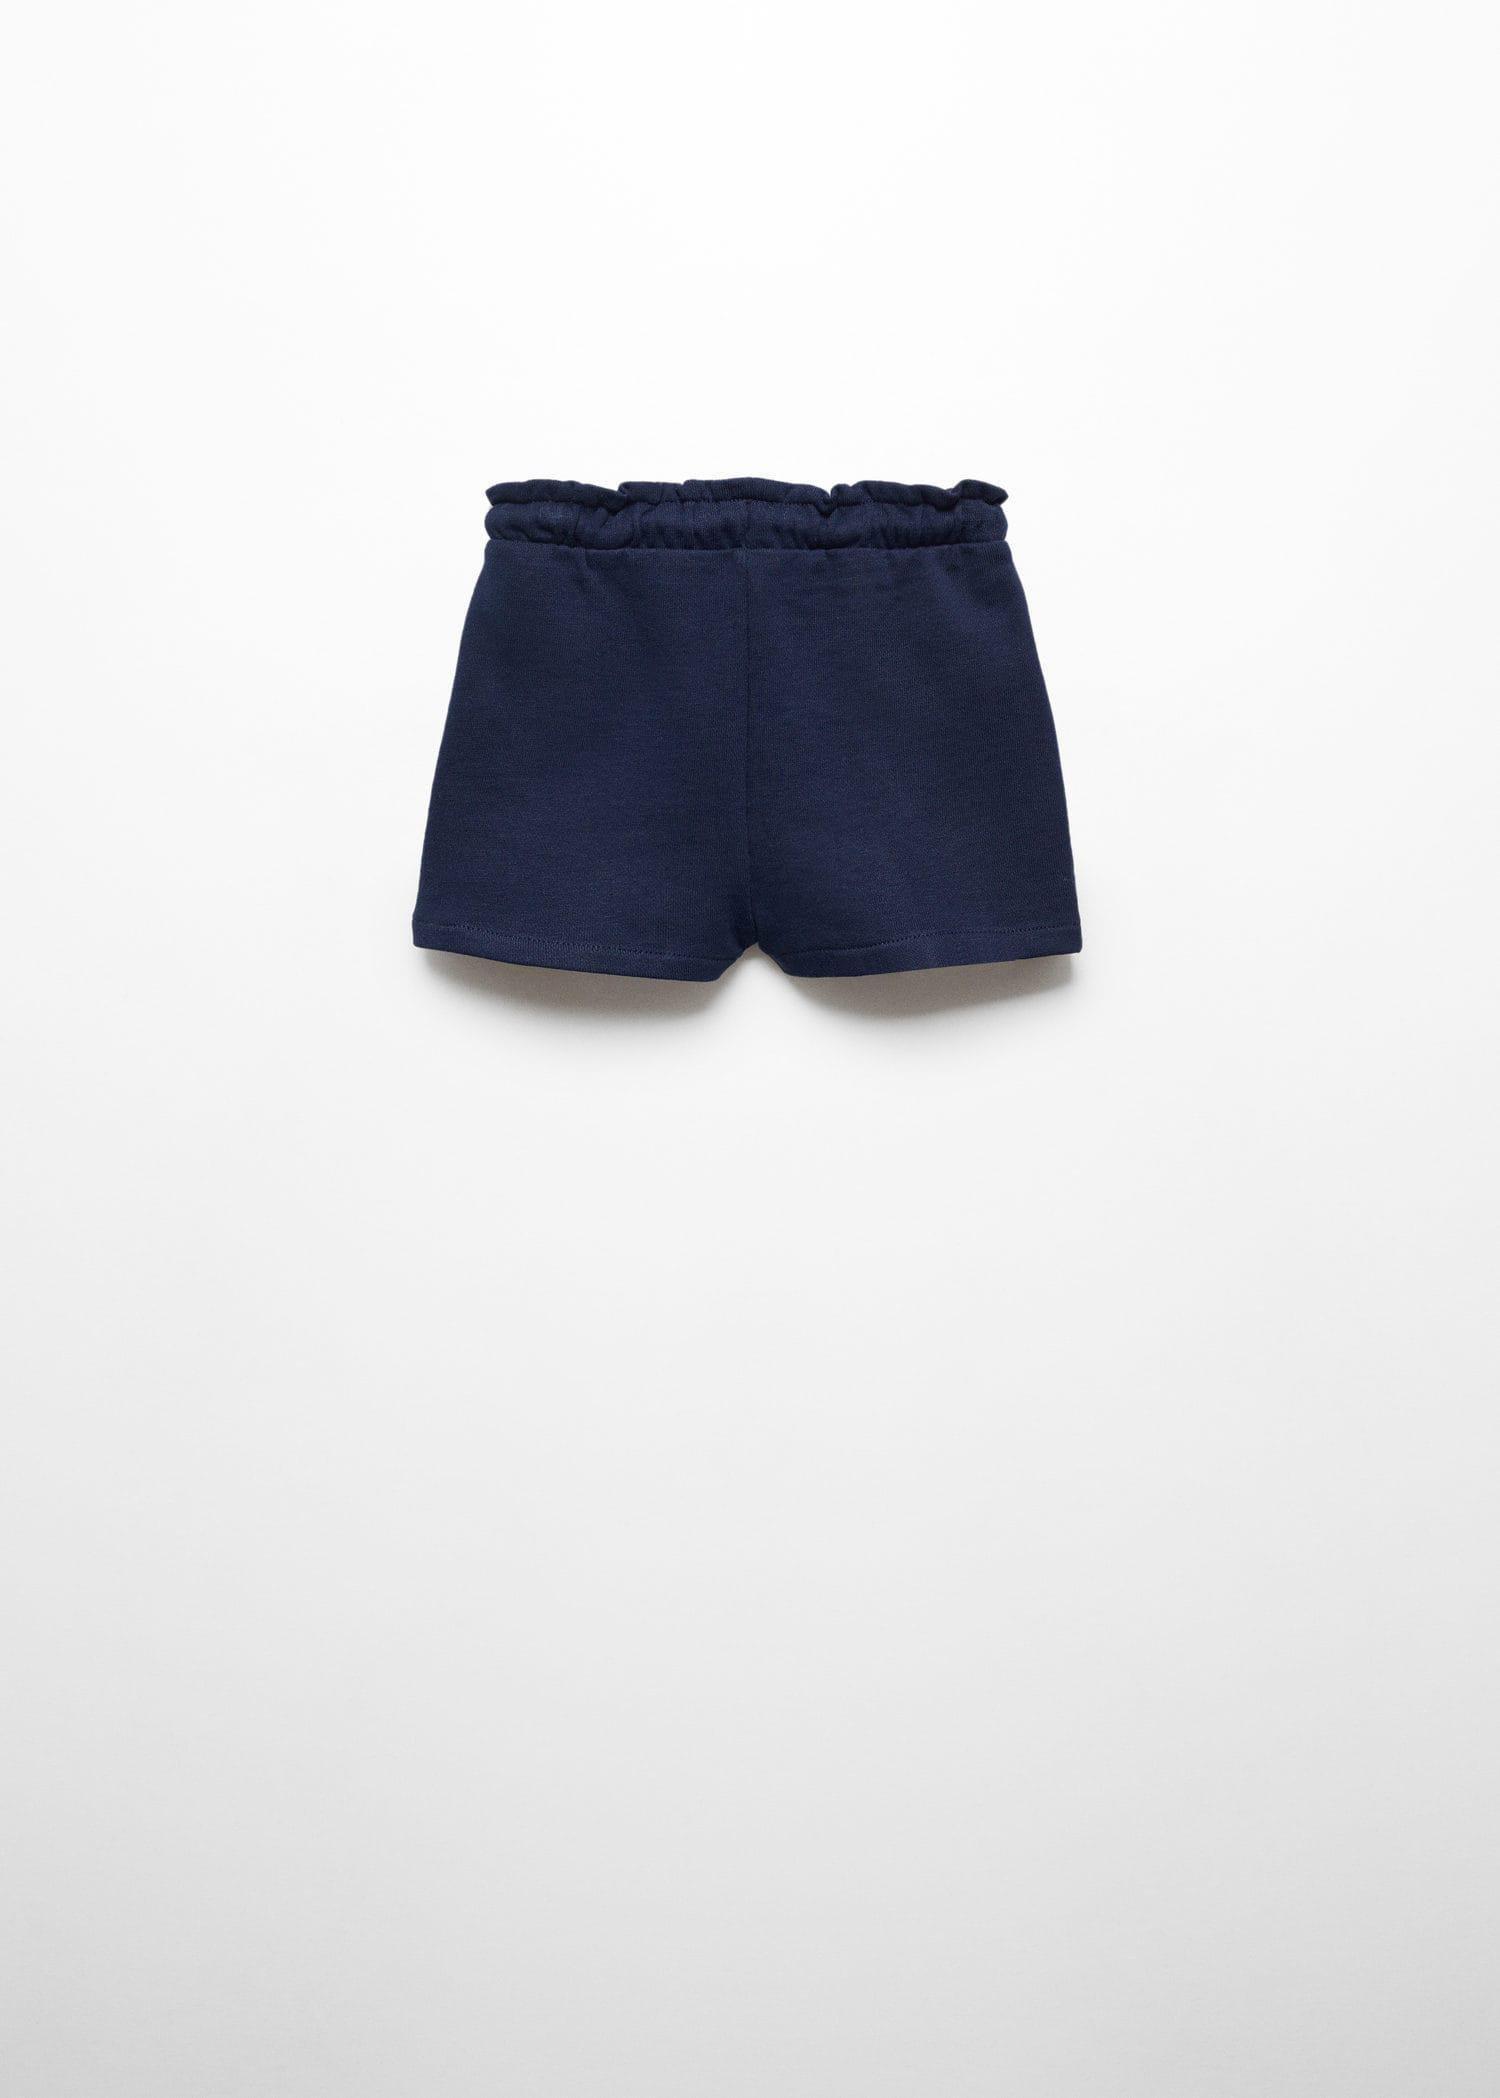 Mango - Navy Cotton Drawstring Waist Shorts, Baby Girls